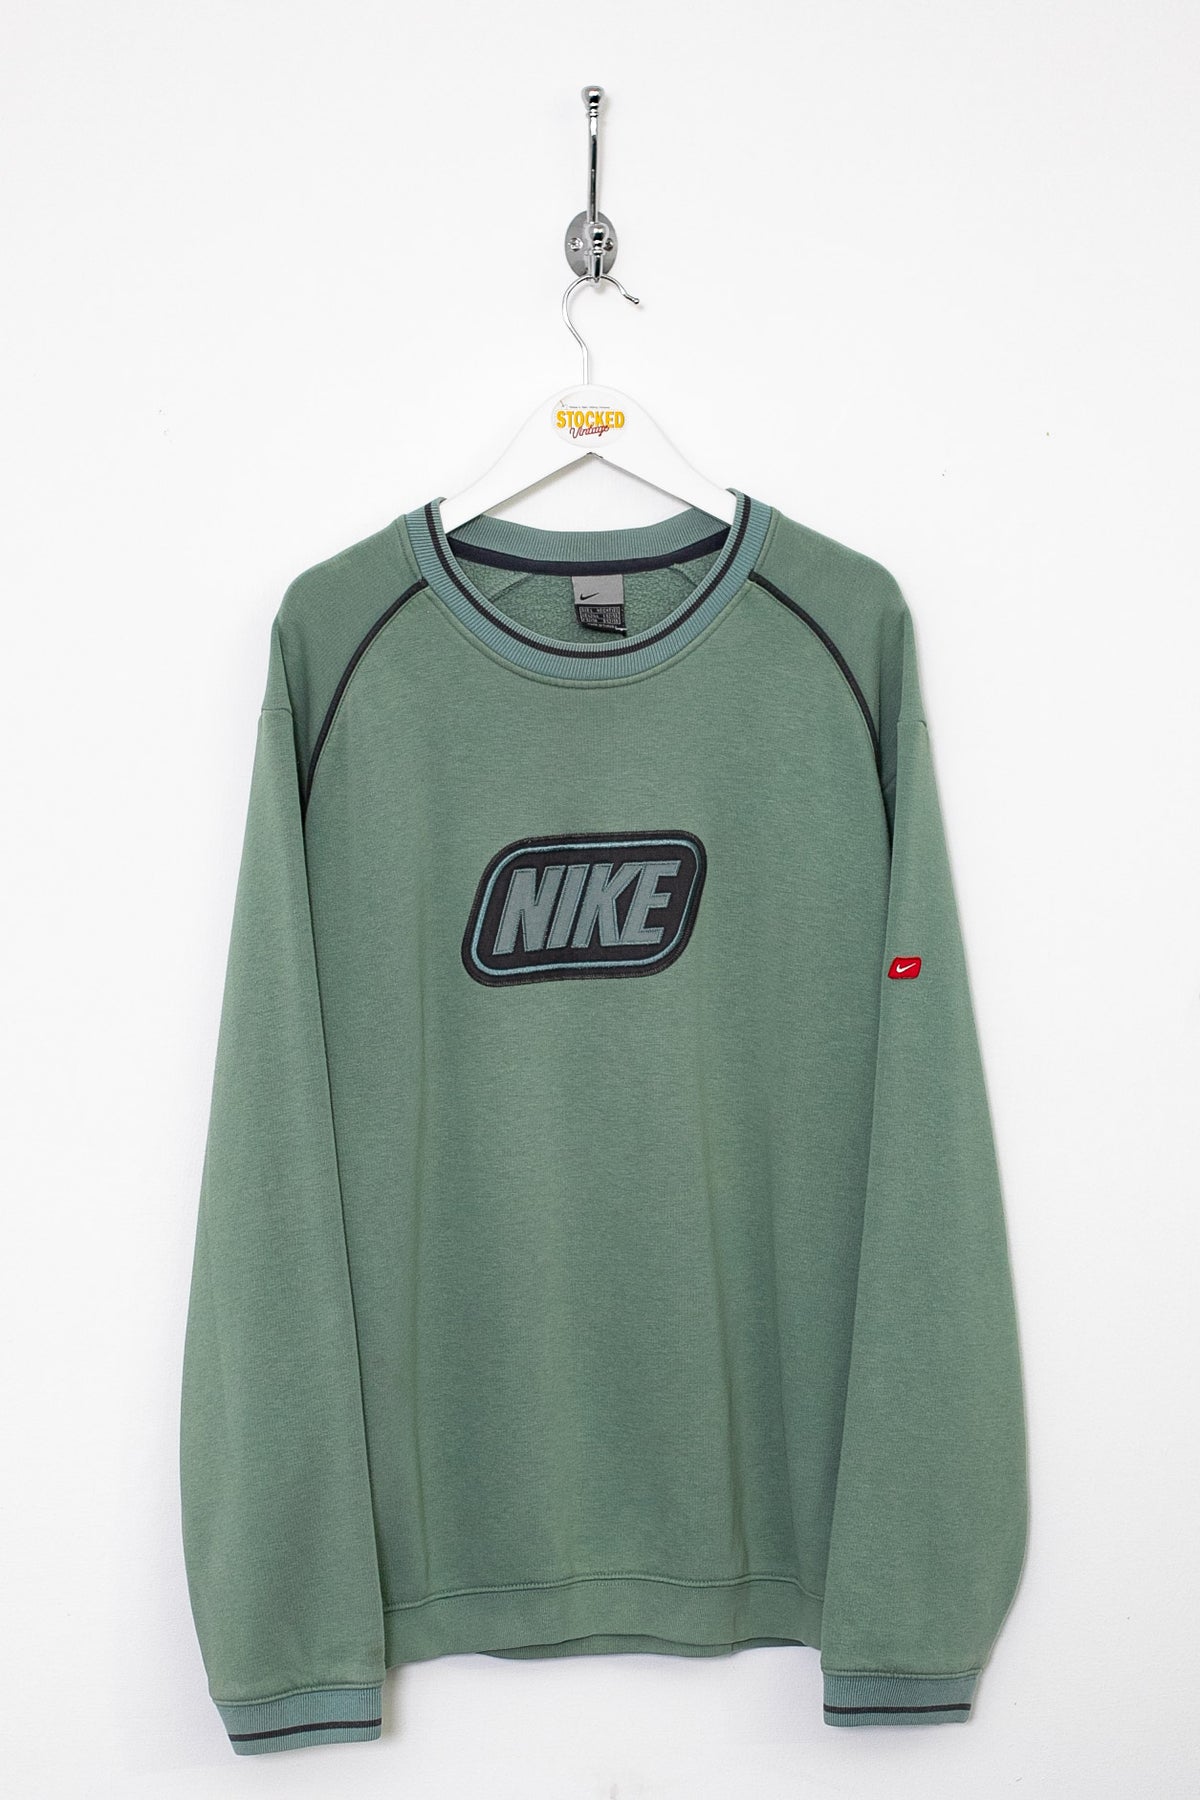 00s Nike Sweatshirt (L)